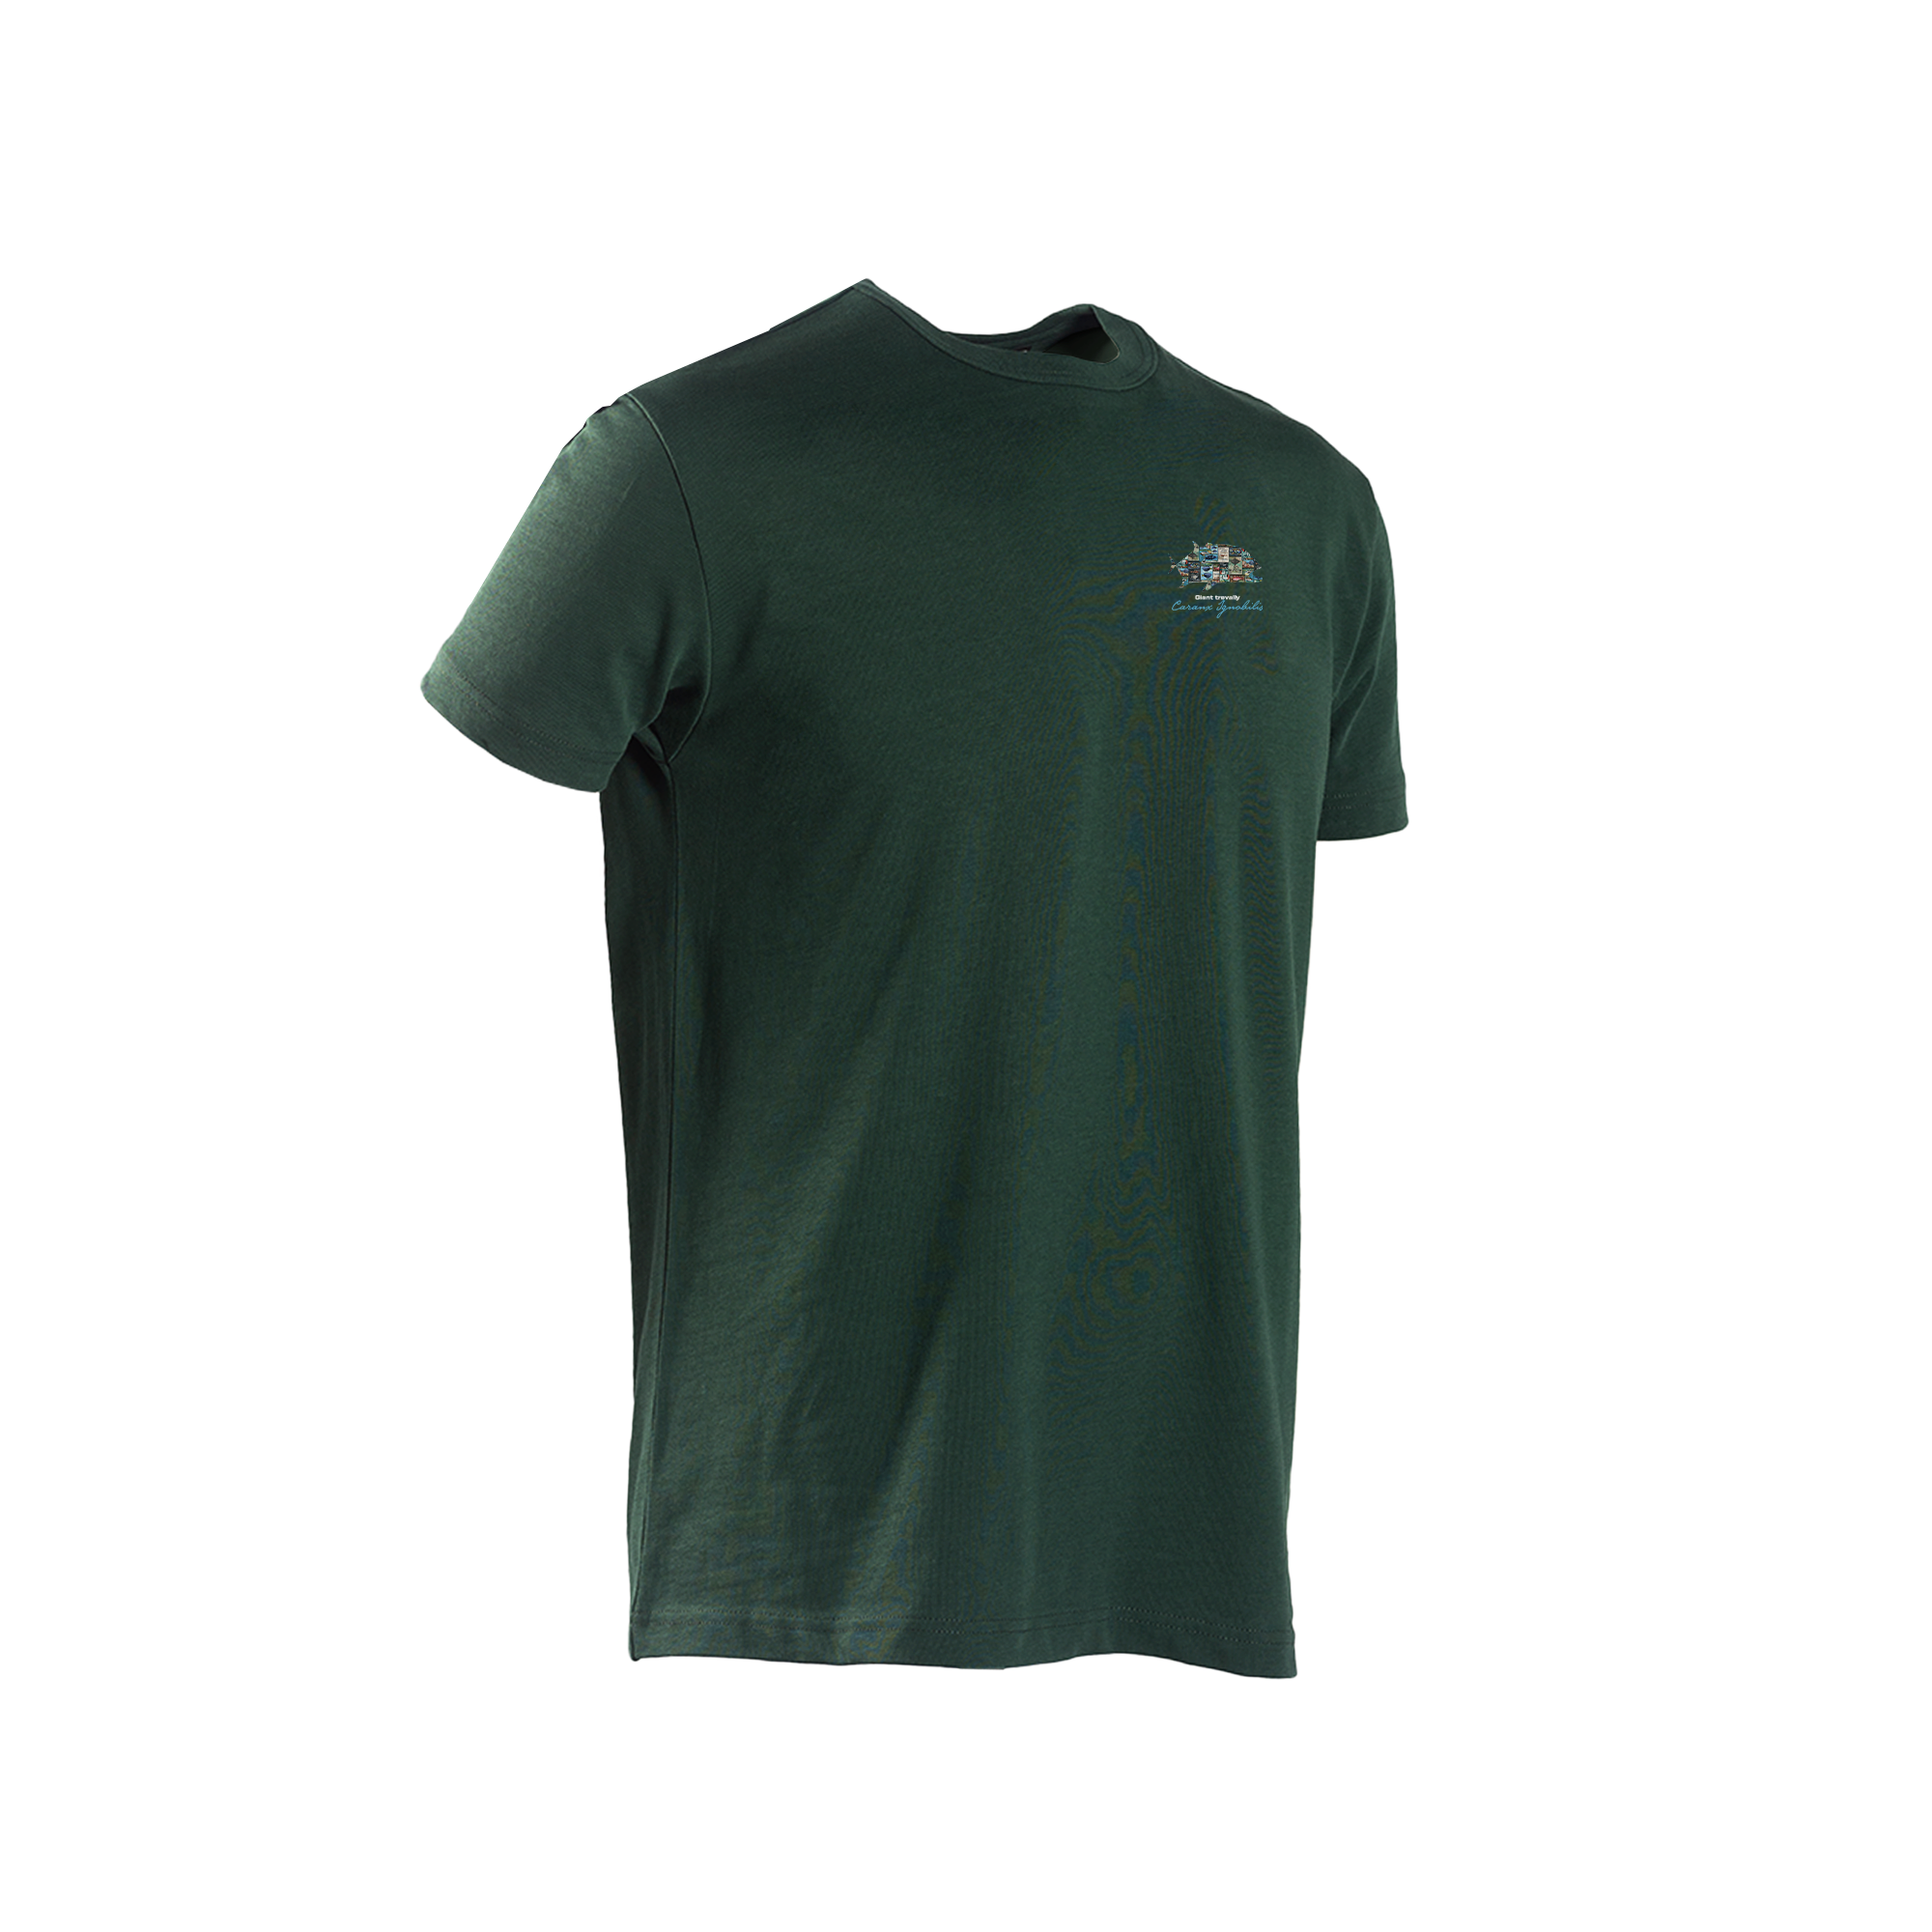 Graphite Short Sleeve Crew Neck T-Shirt Giant Trevally Patterned